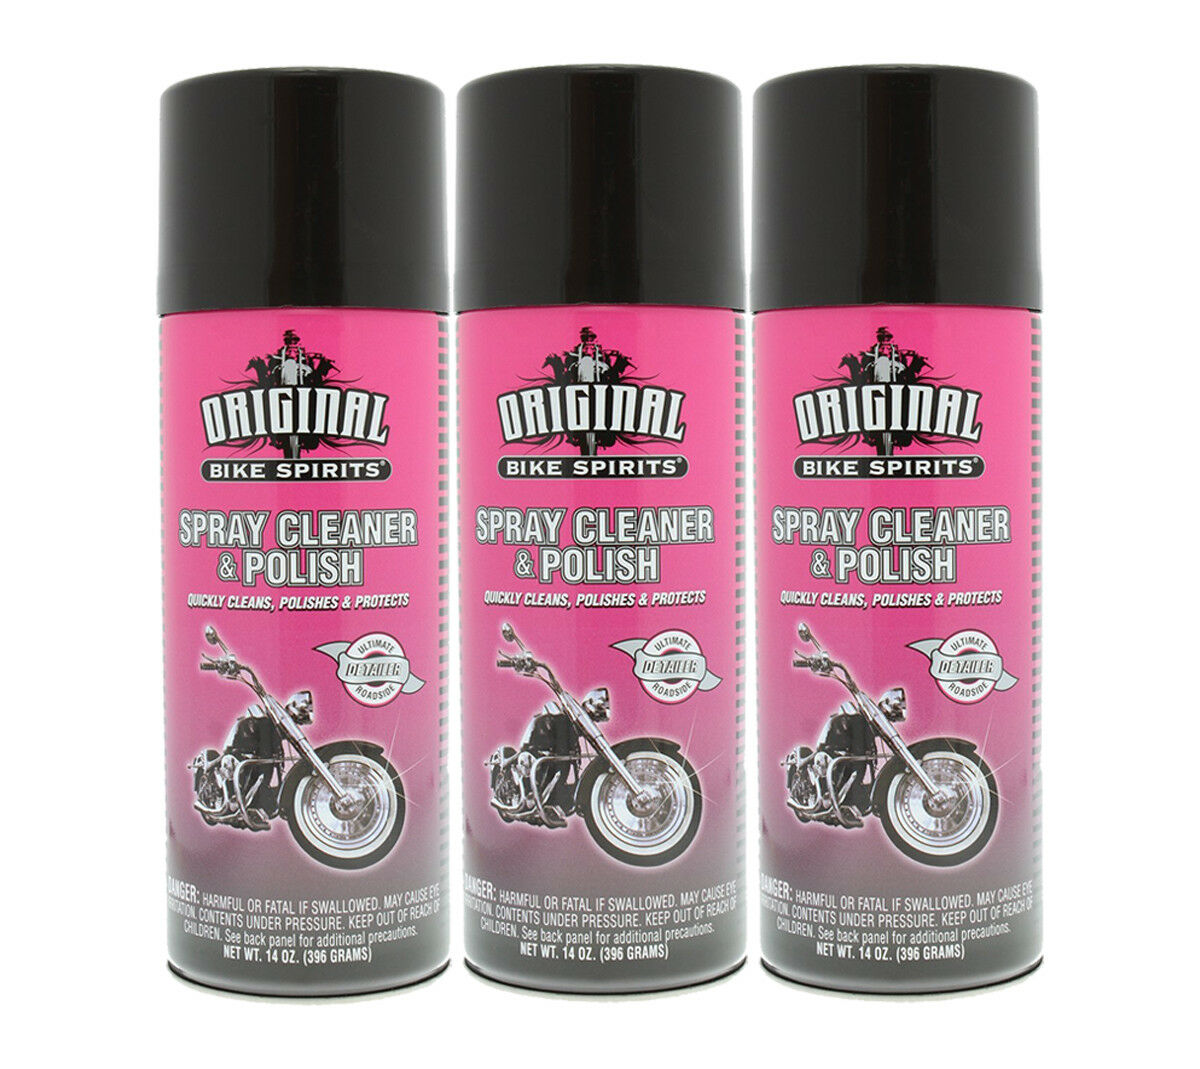 Original Bike Spirits Motorcycle Atv Spray Cleaner & Polish 14oz 3-pack